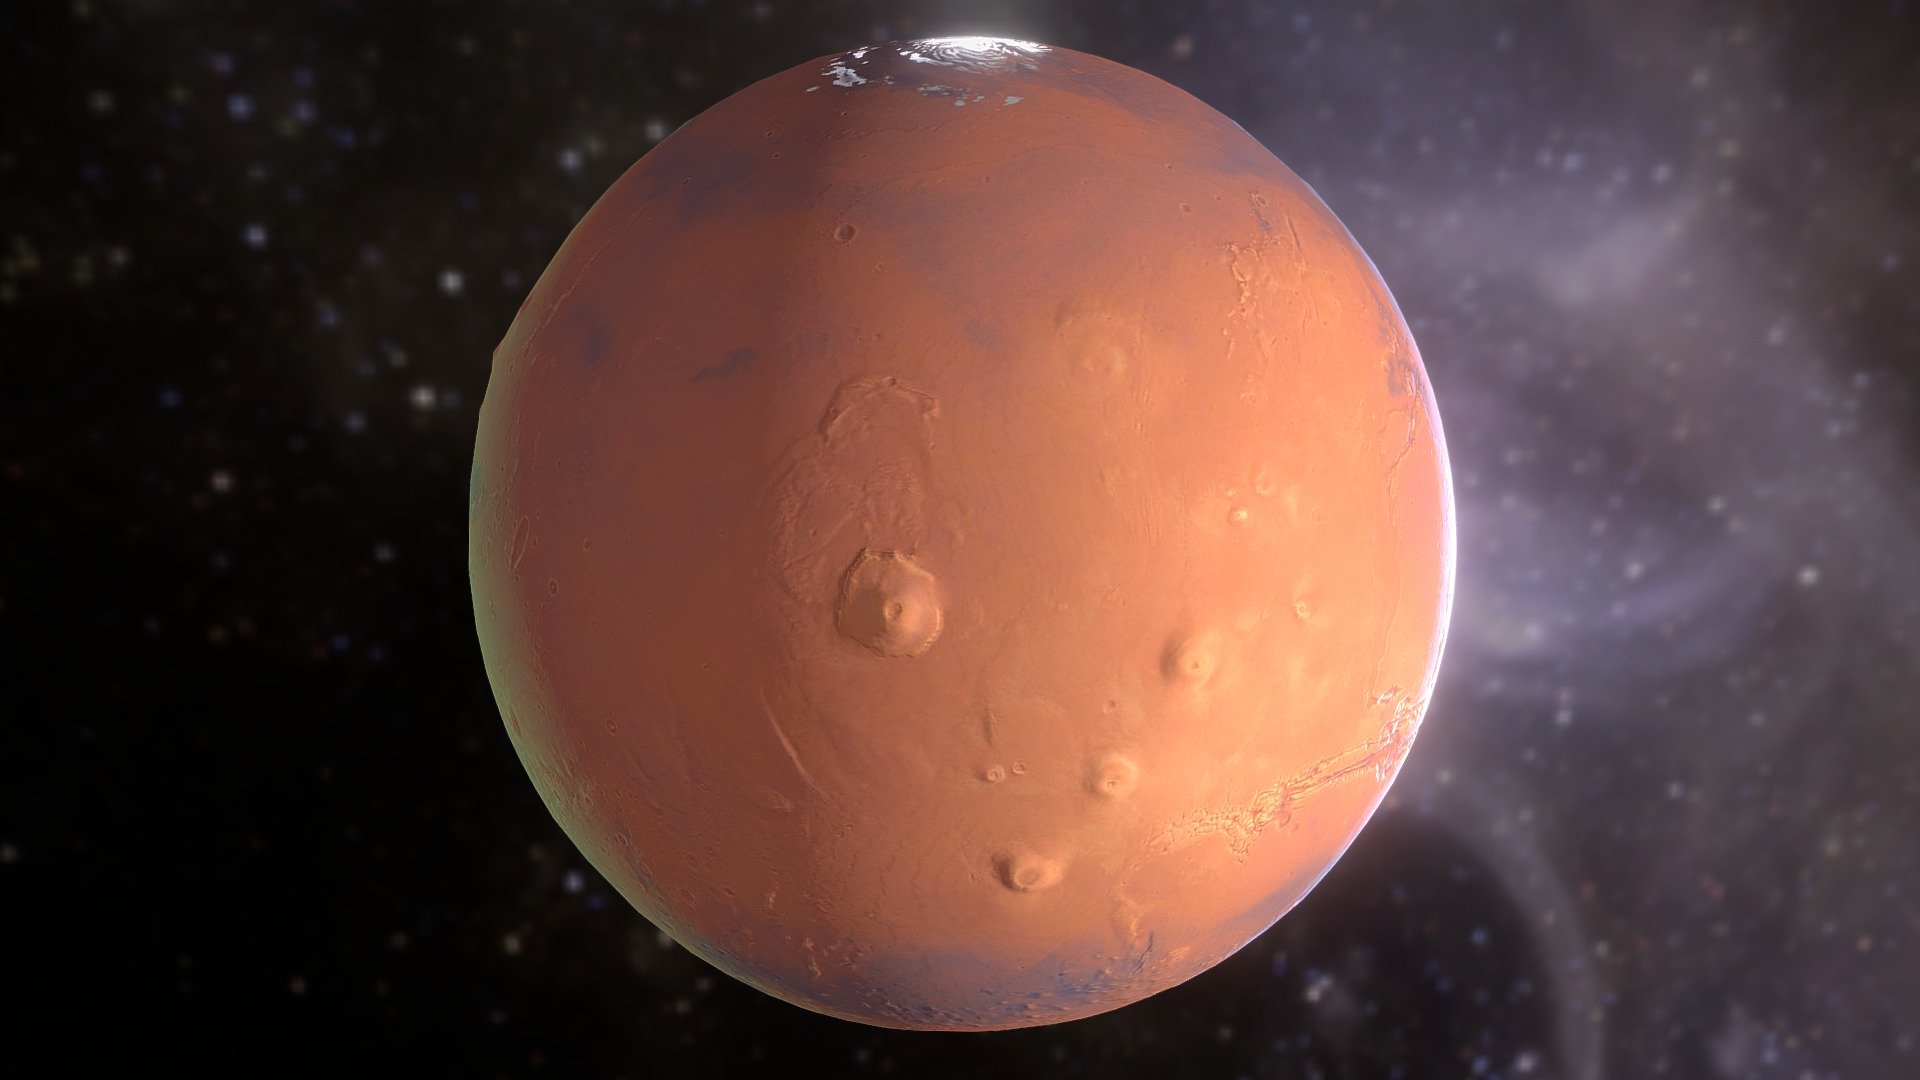 Low poly mars model.  https://en.wikipedia.org/wiki/Mars  One of its satellite : Phobos  -link removed- - Martian Globe lowpoly - 3D model by benoit3d 3d model